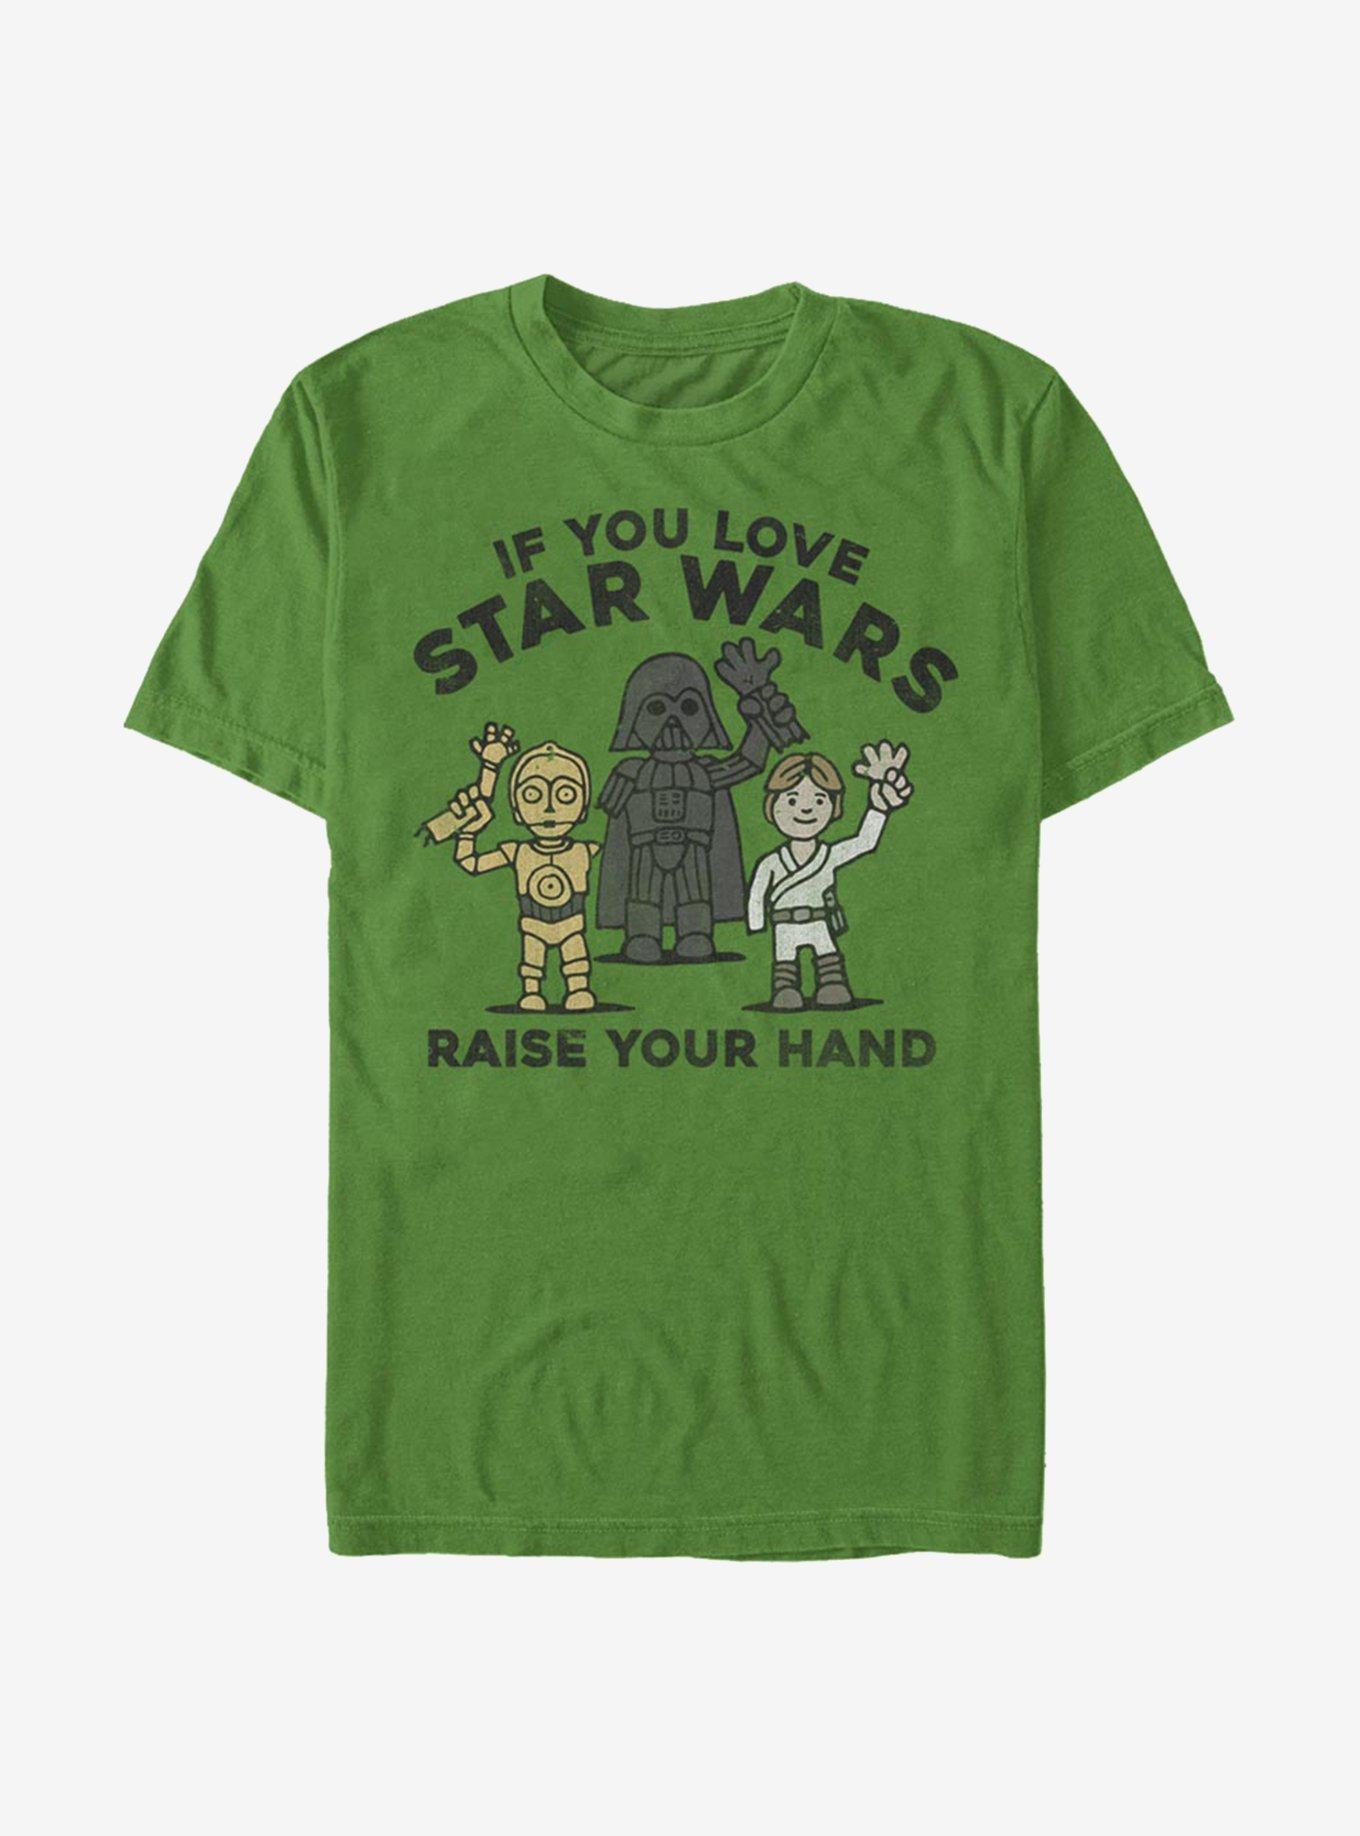 Star Wars Raise Your Hands T-Shirt